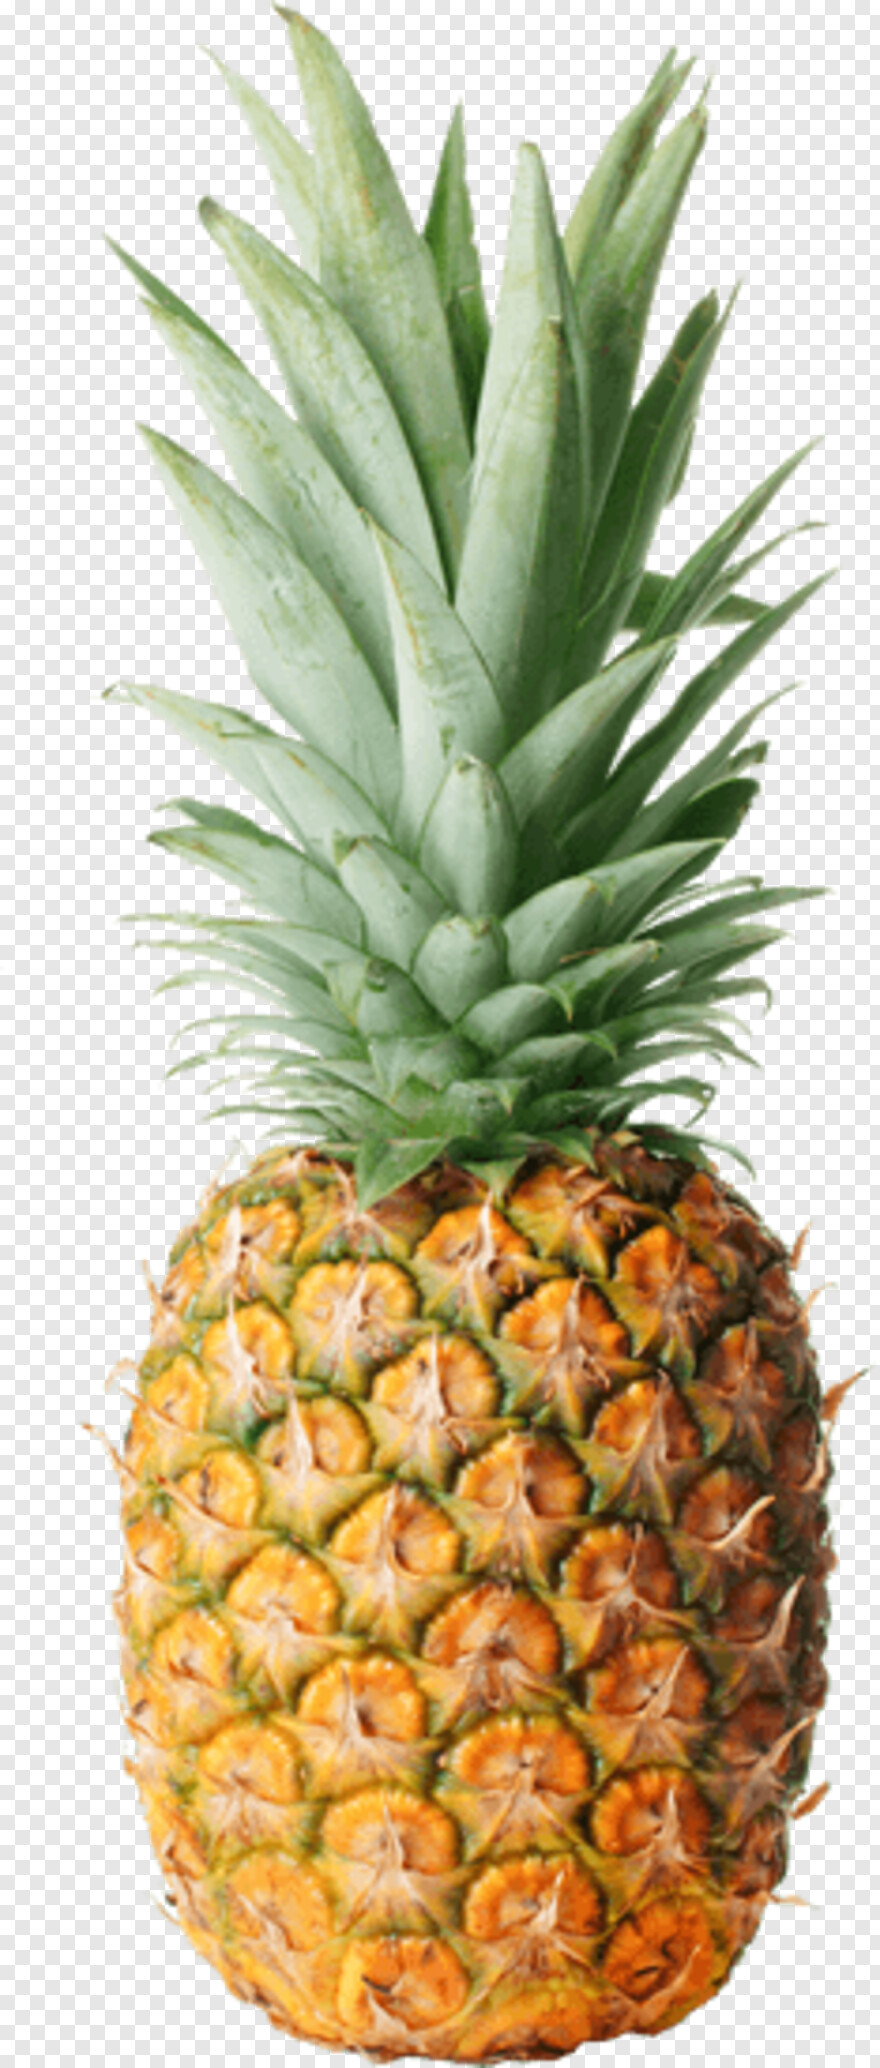 pineapple # 654142